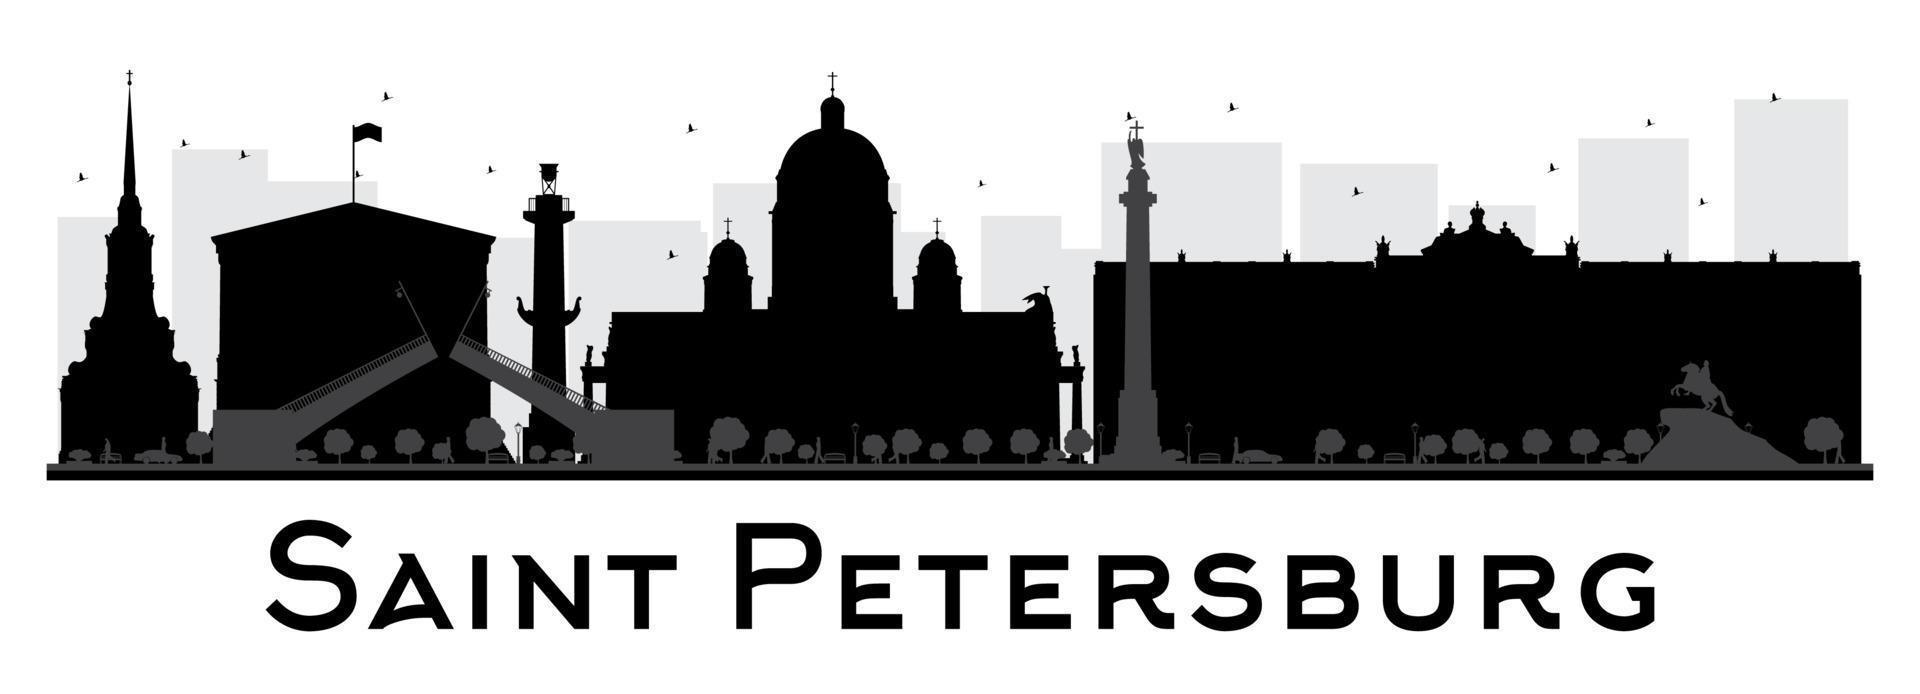 Saint Petersburg City skyline black and white silhouette. vector